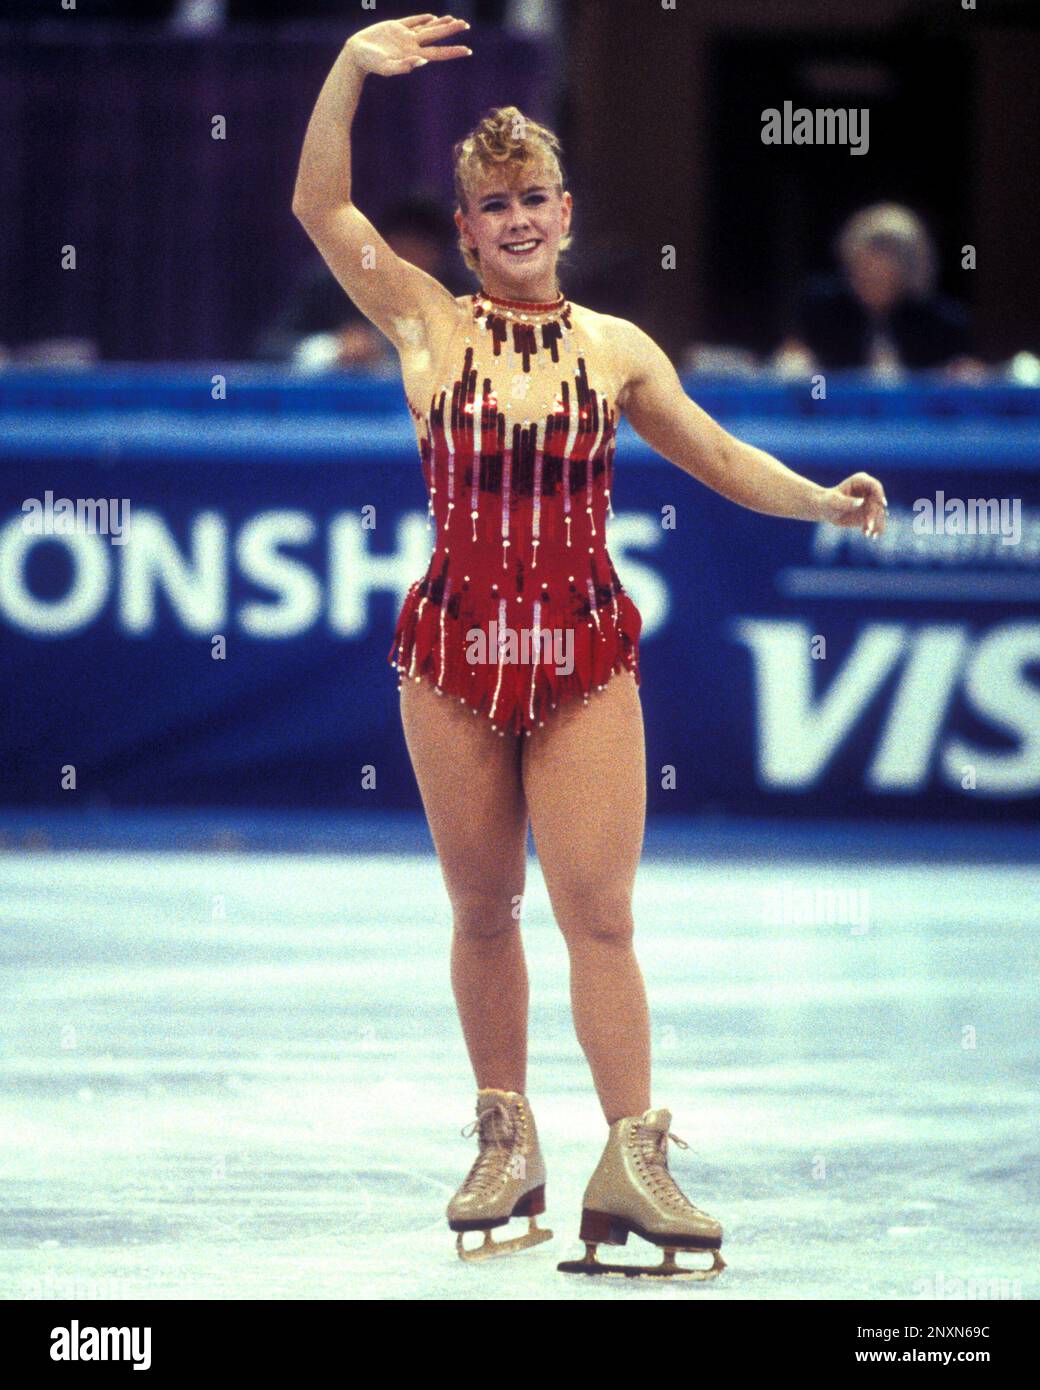 Tonya Harding skates at the United States Figure Skating Championships, January 1993 at America West Arena, Phoenix